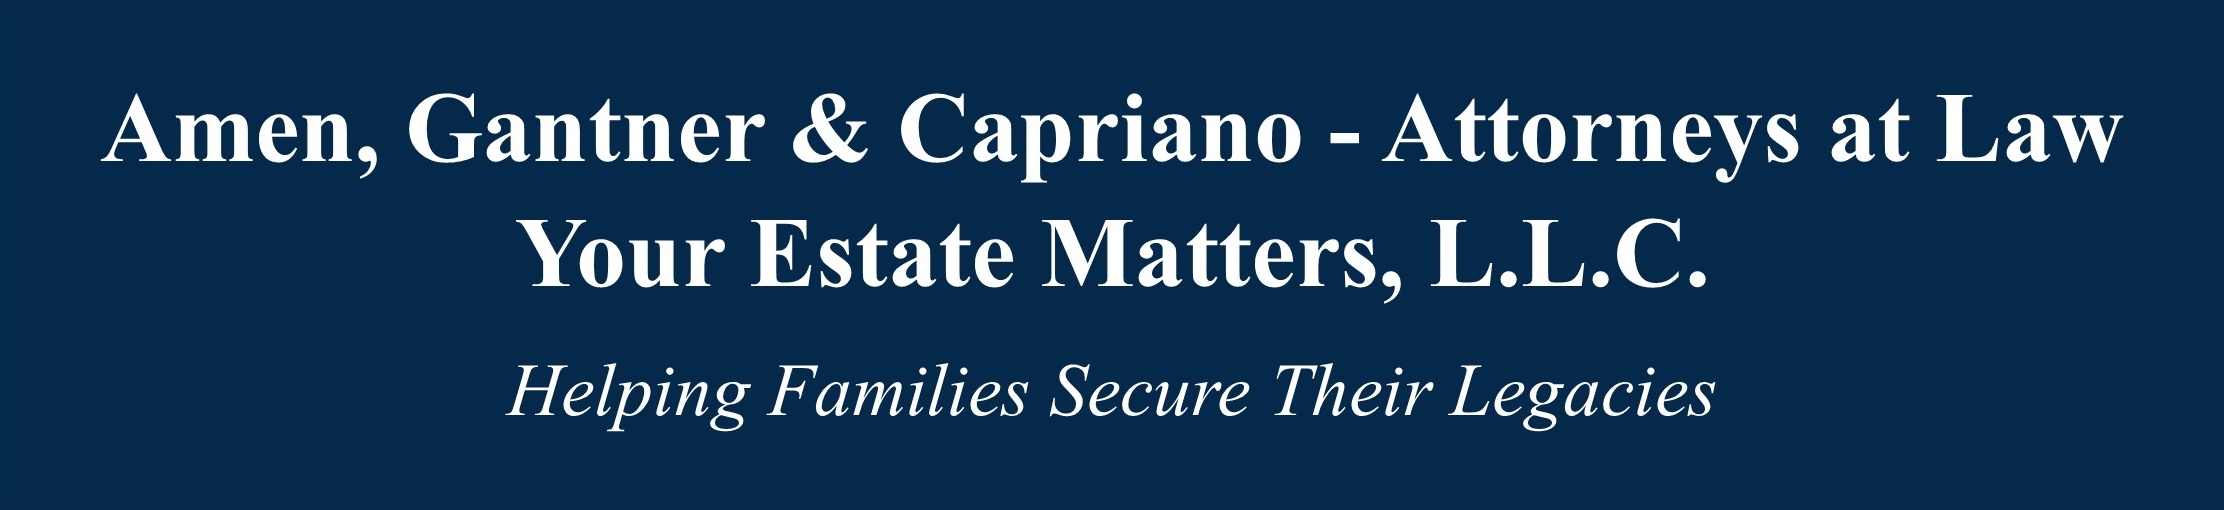 Amen, Gantner, and Capriano logo